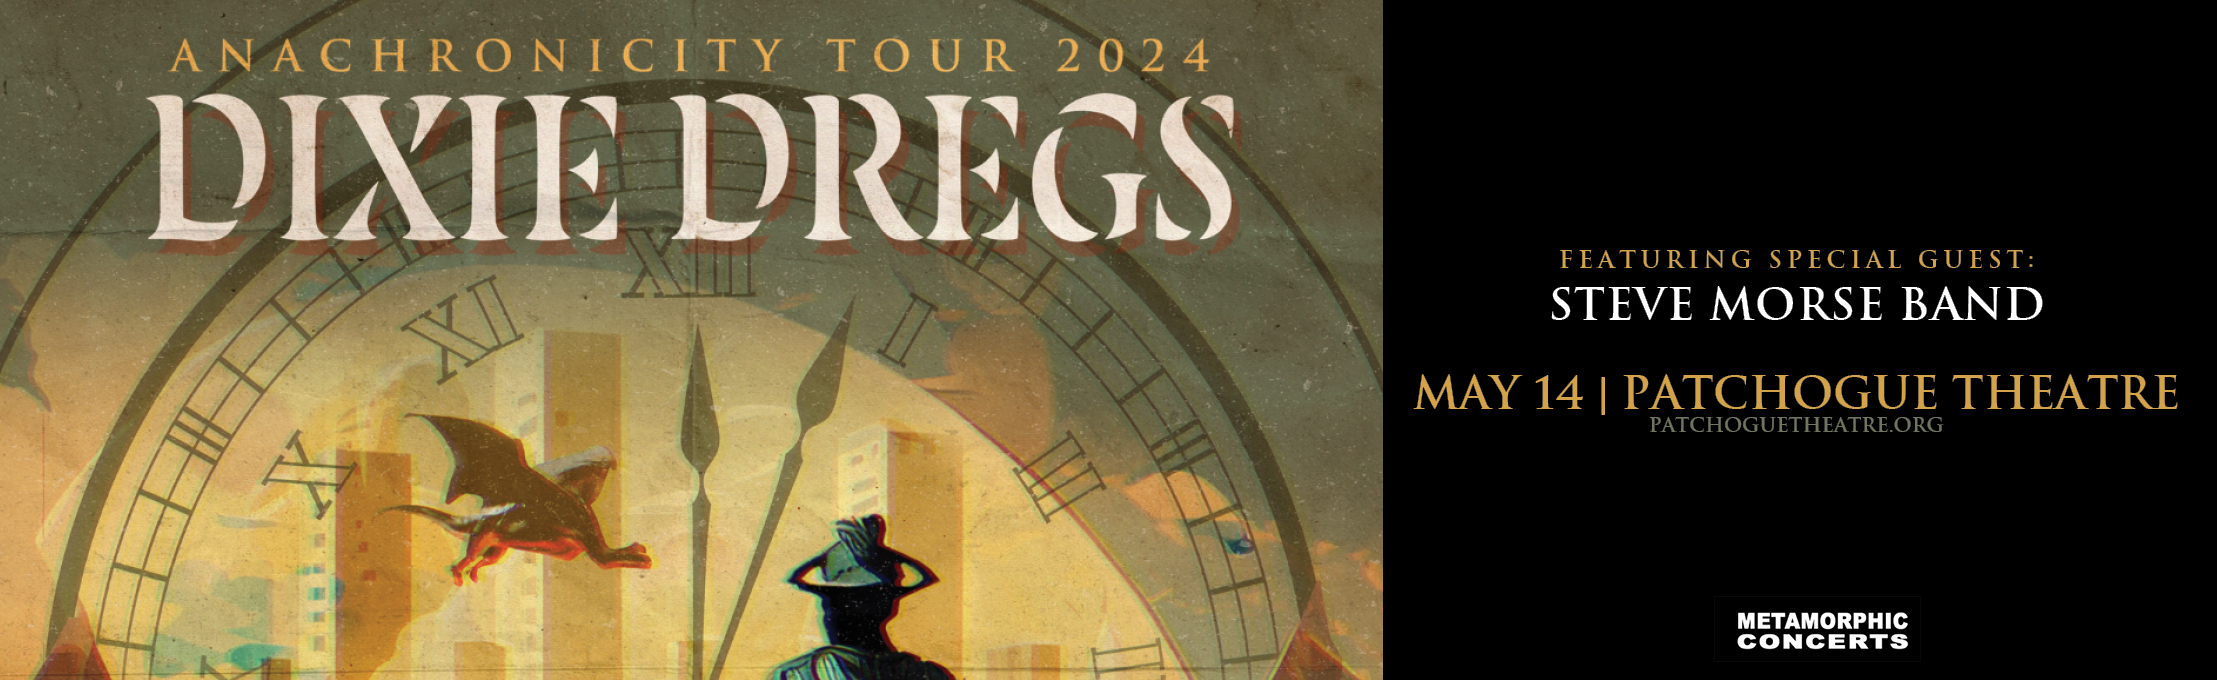 Dixie Dregs: Anachronicity Tour 2024